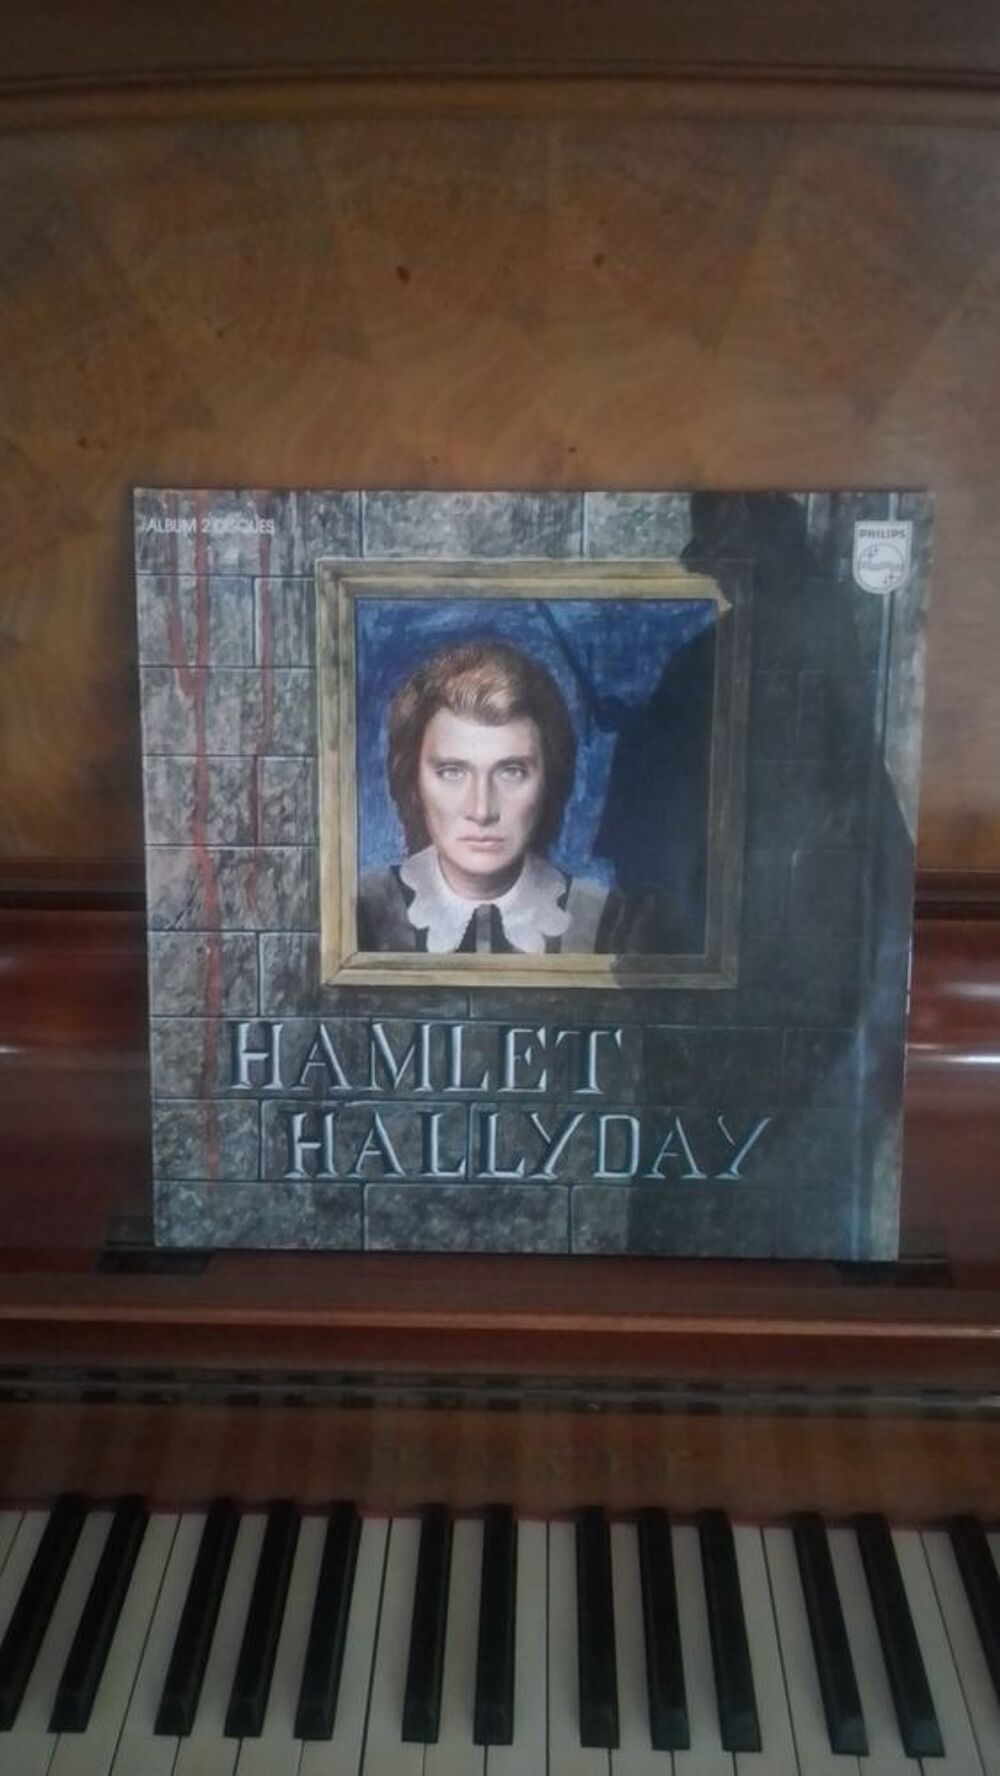 ALBUM VINYLE JOHNNY HALLYDAY HAMLET CD et vinyles